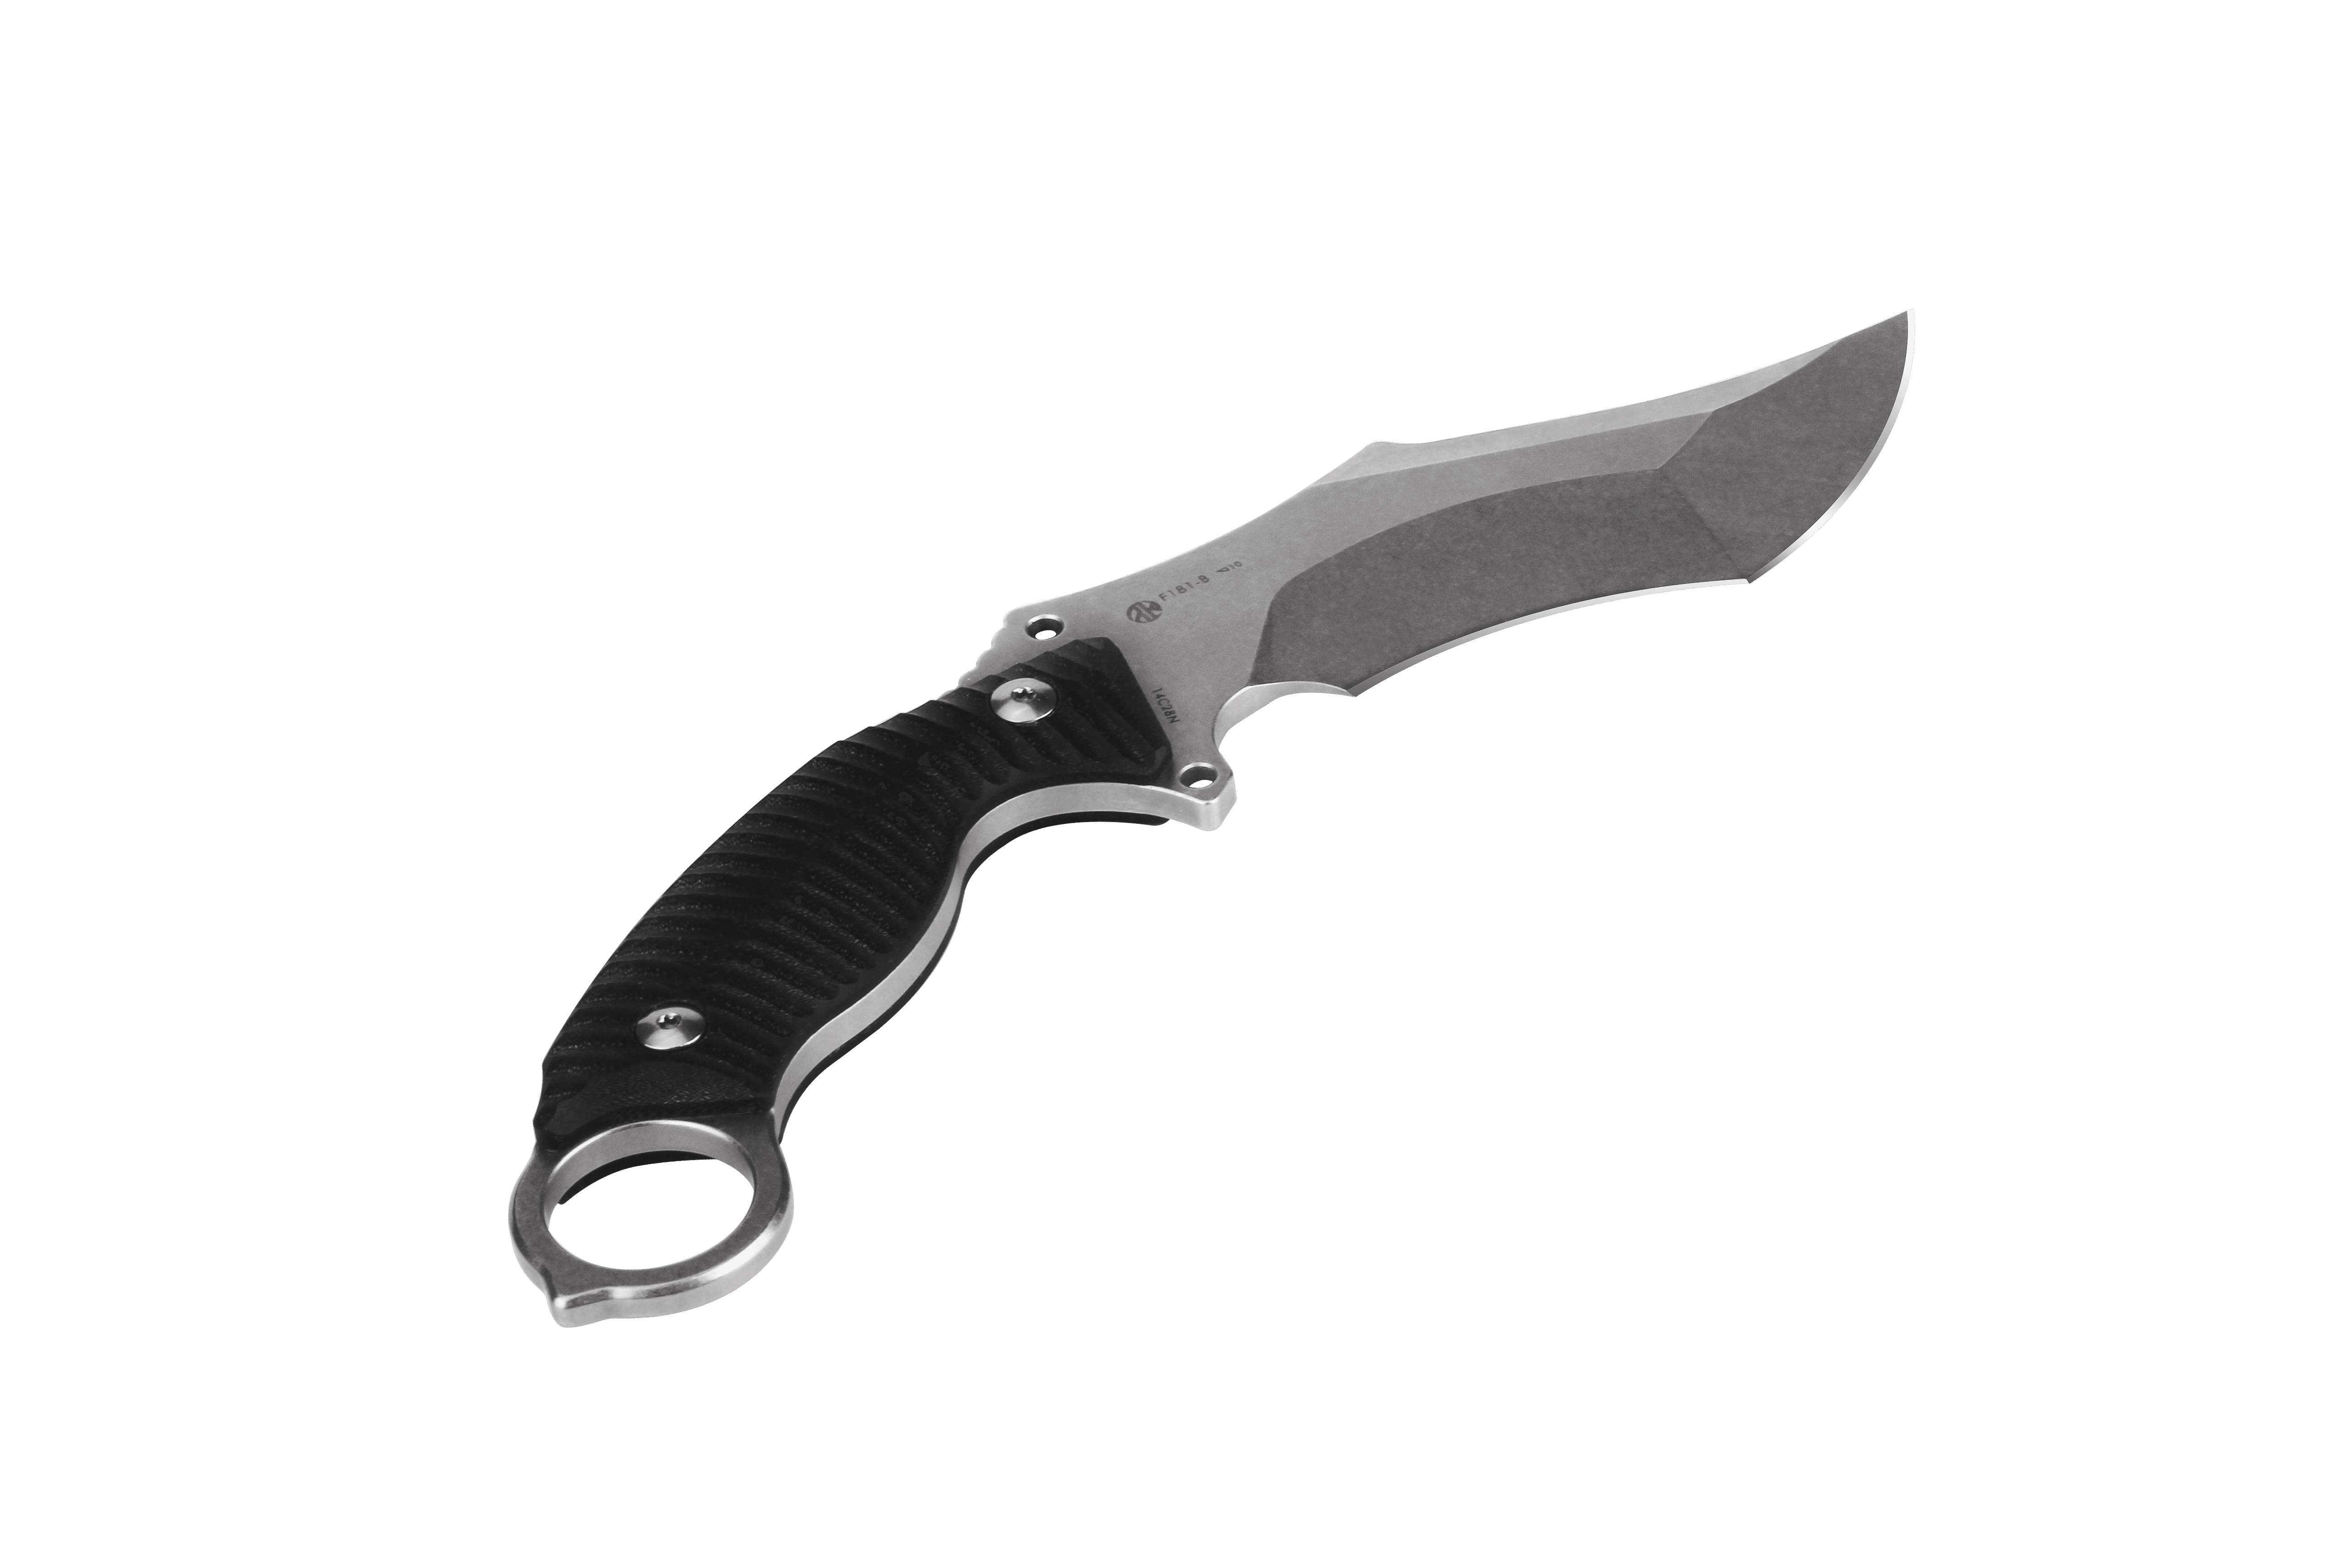 Ruike F181 Fixed Blade Black G10 SW 14C28N Sandvik - Knives.mx